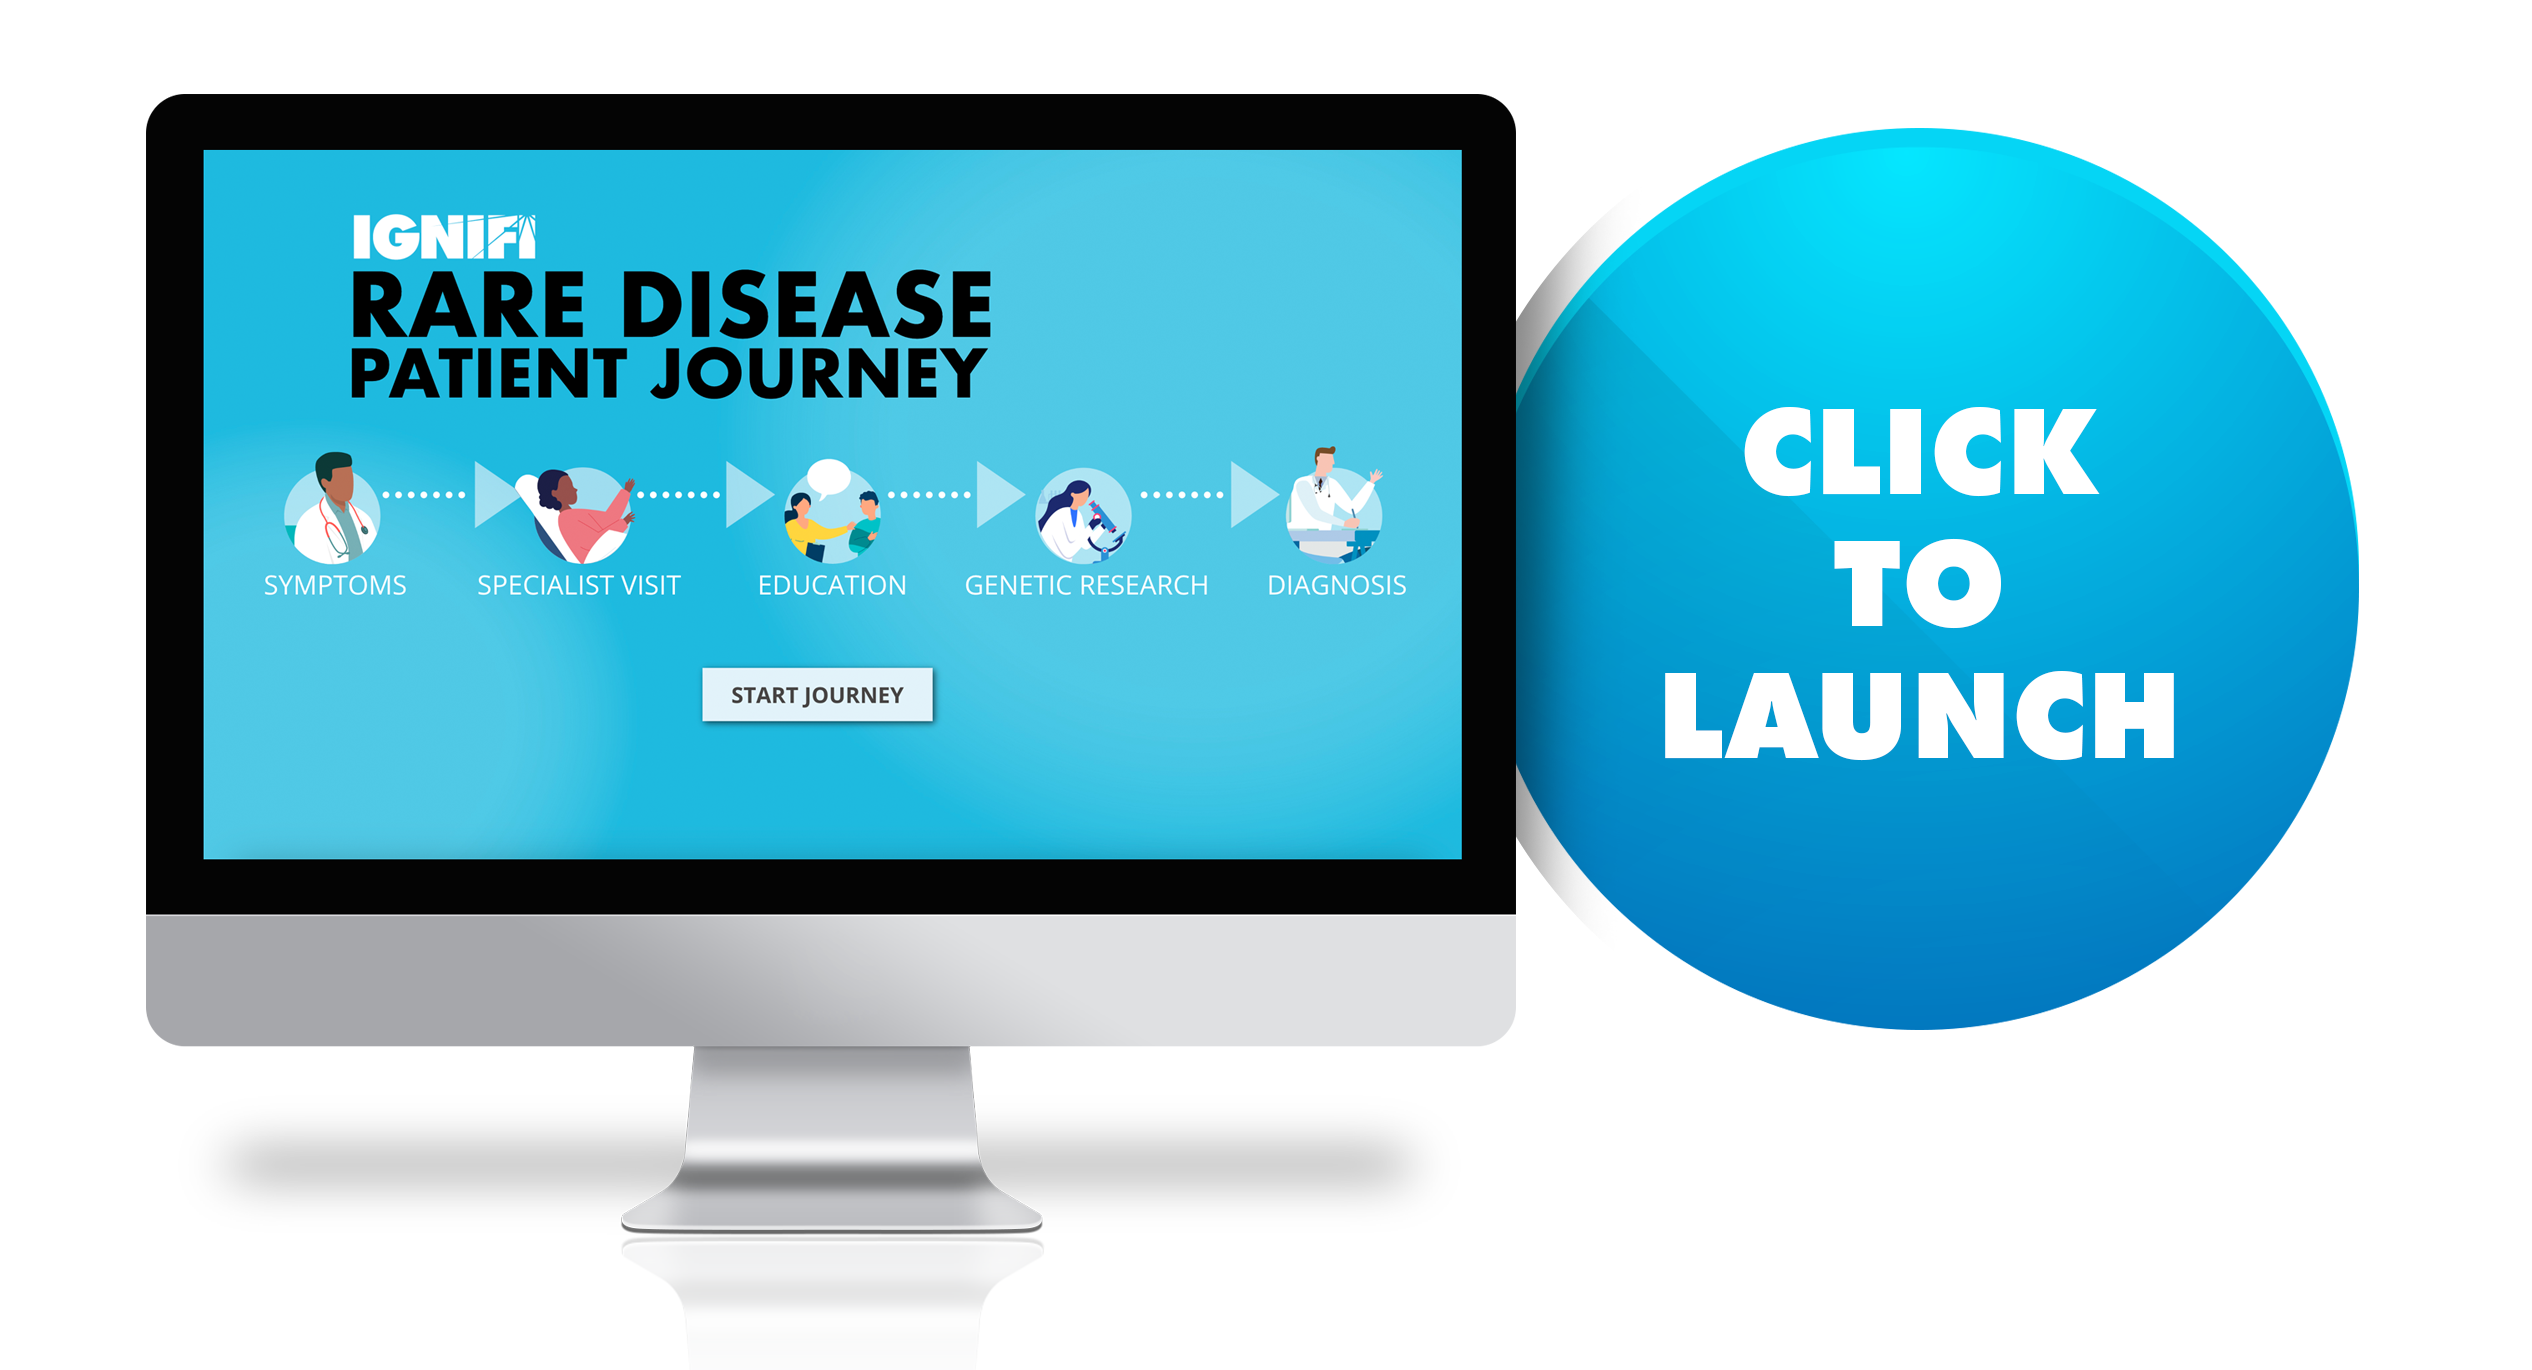 Ignifi rare disease infographic launch image